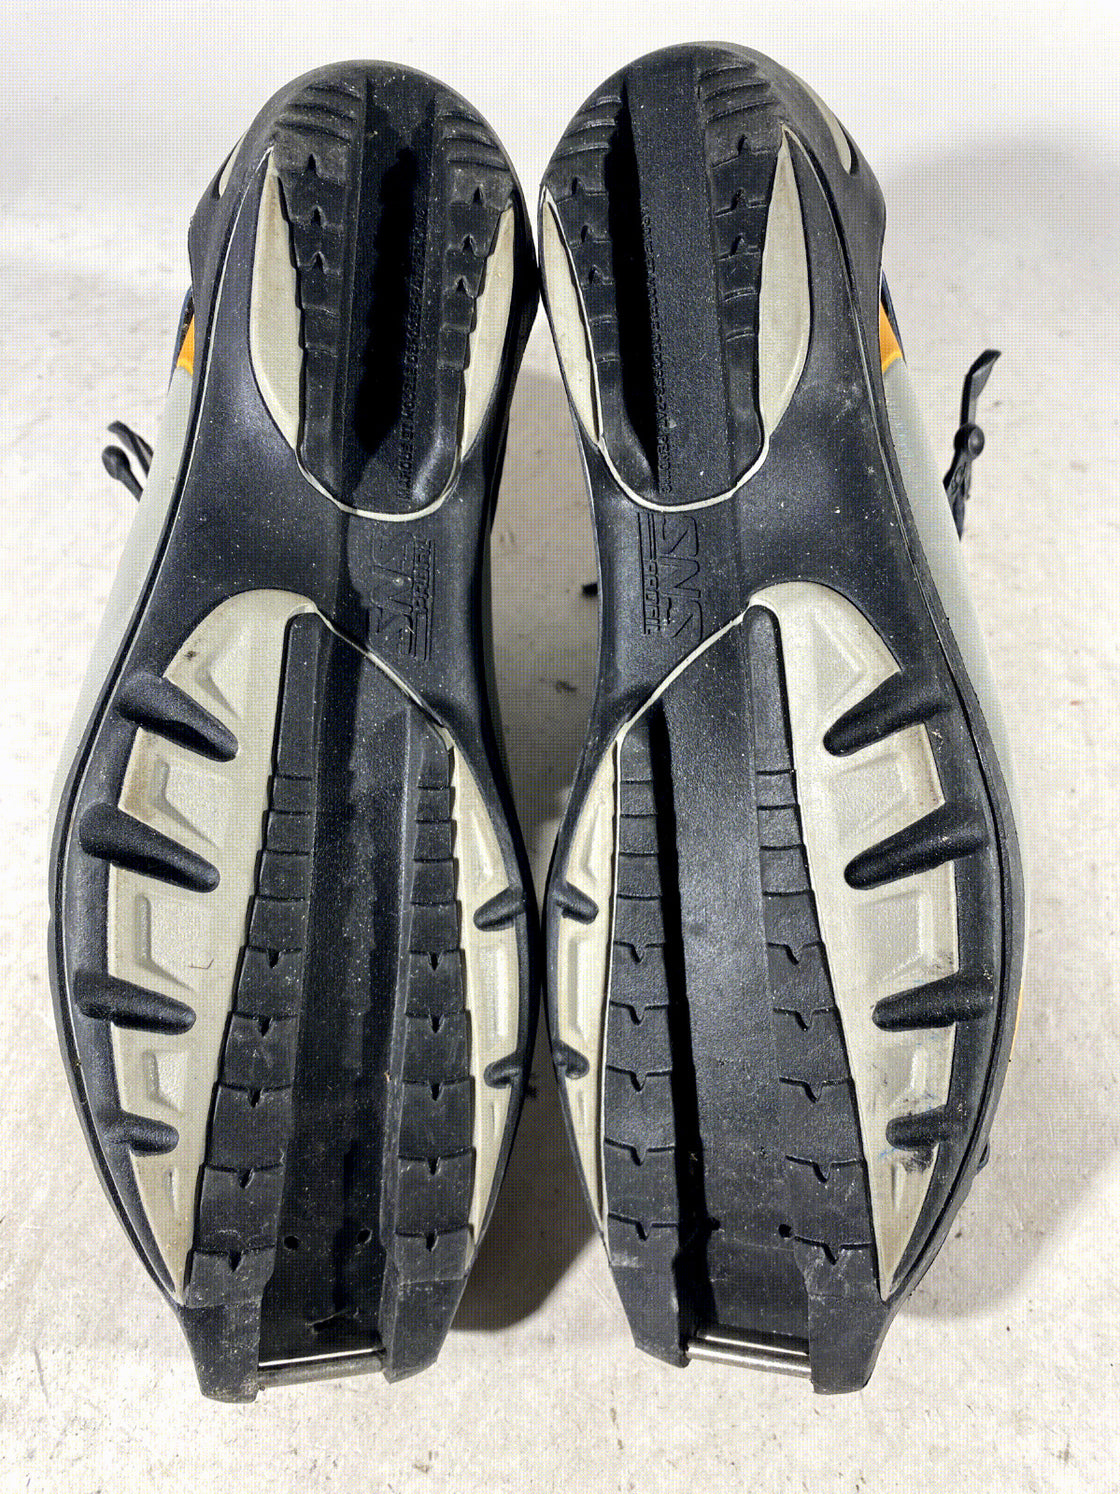 Salomon Classic Nordic Cross Country Ski Boots Size EU40 US7 for SNS Profil